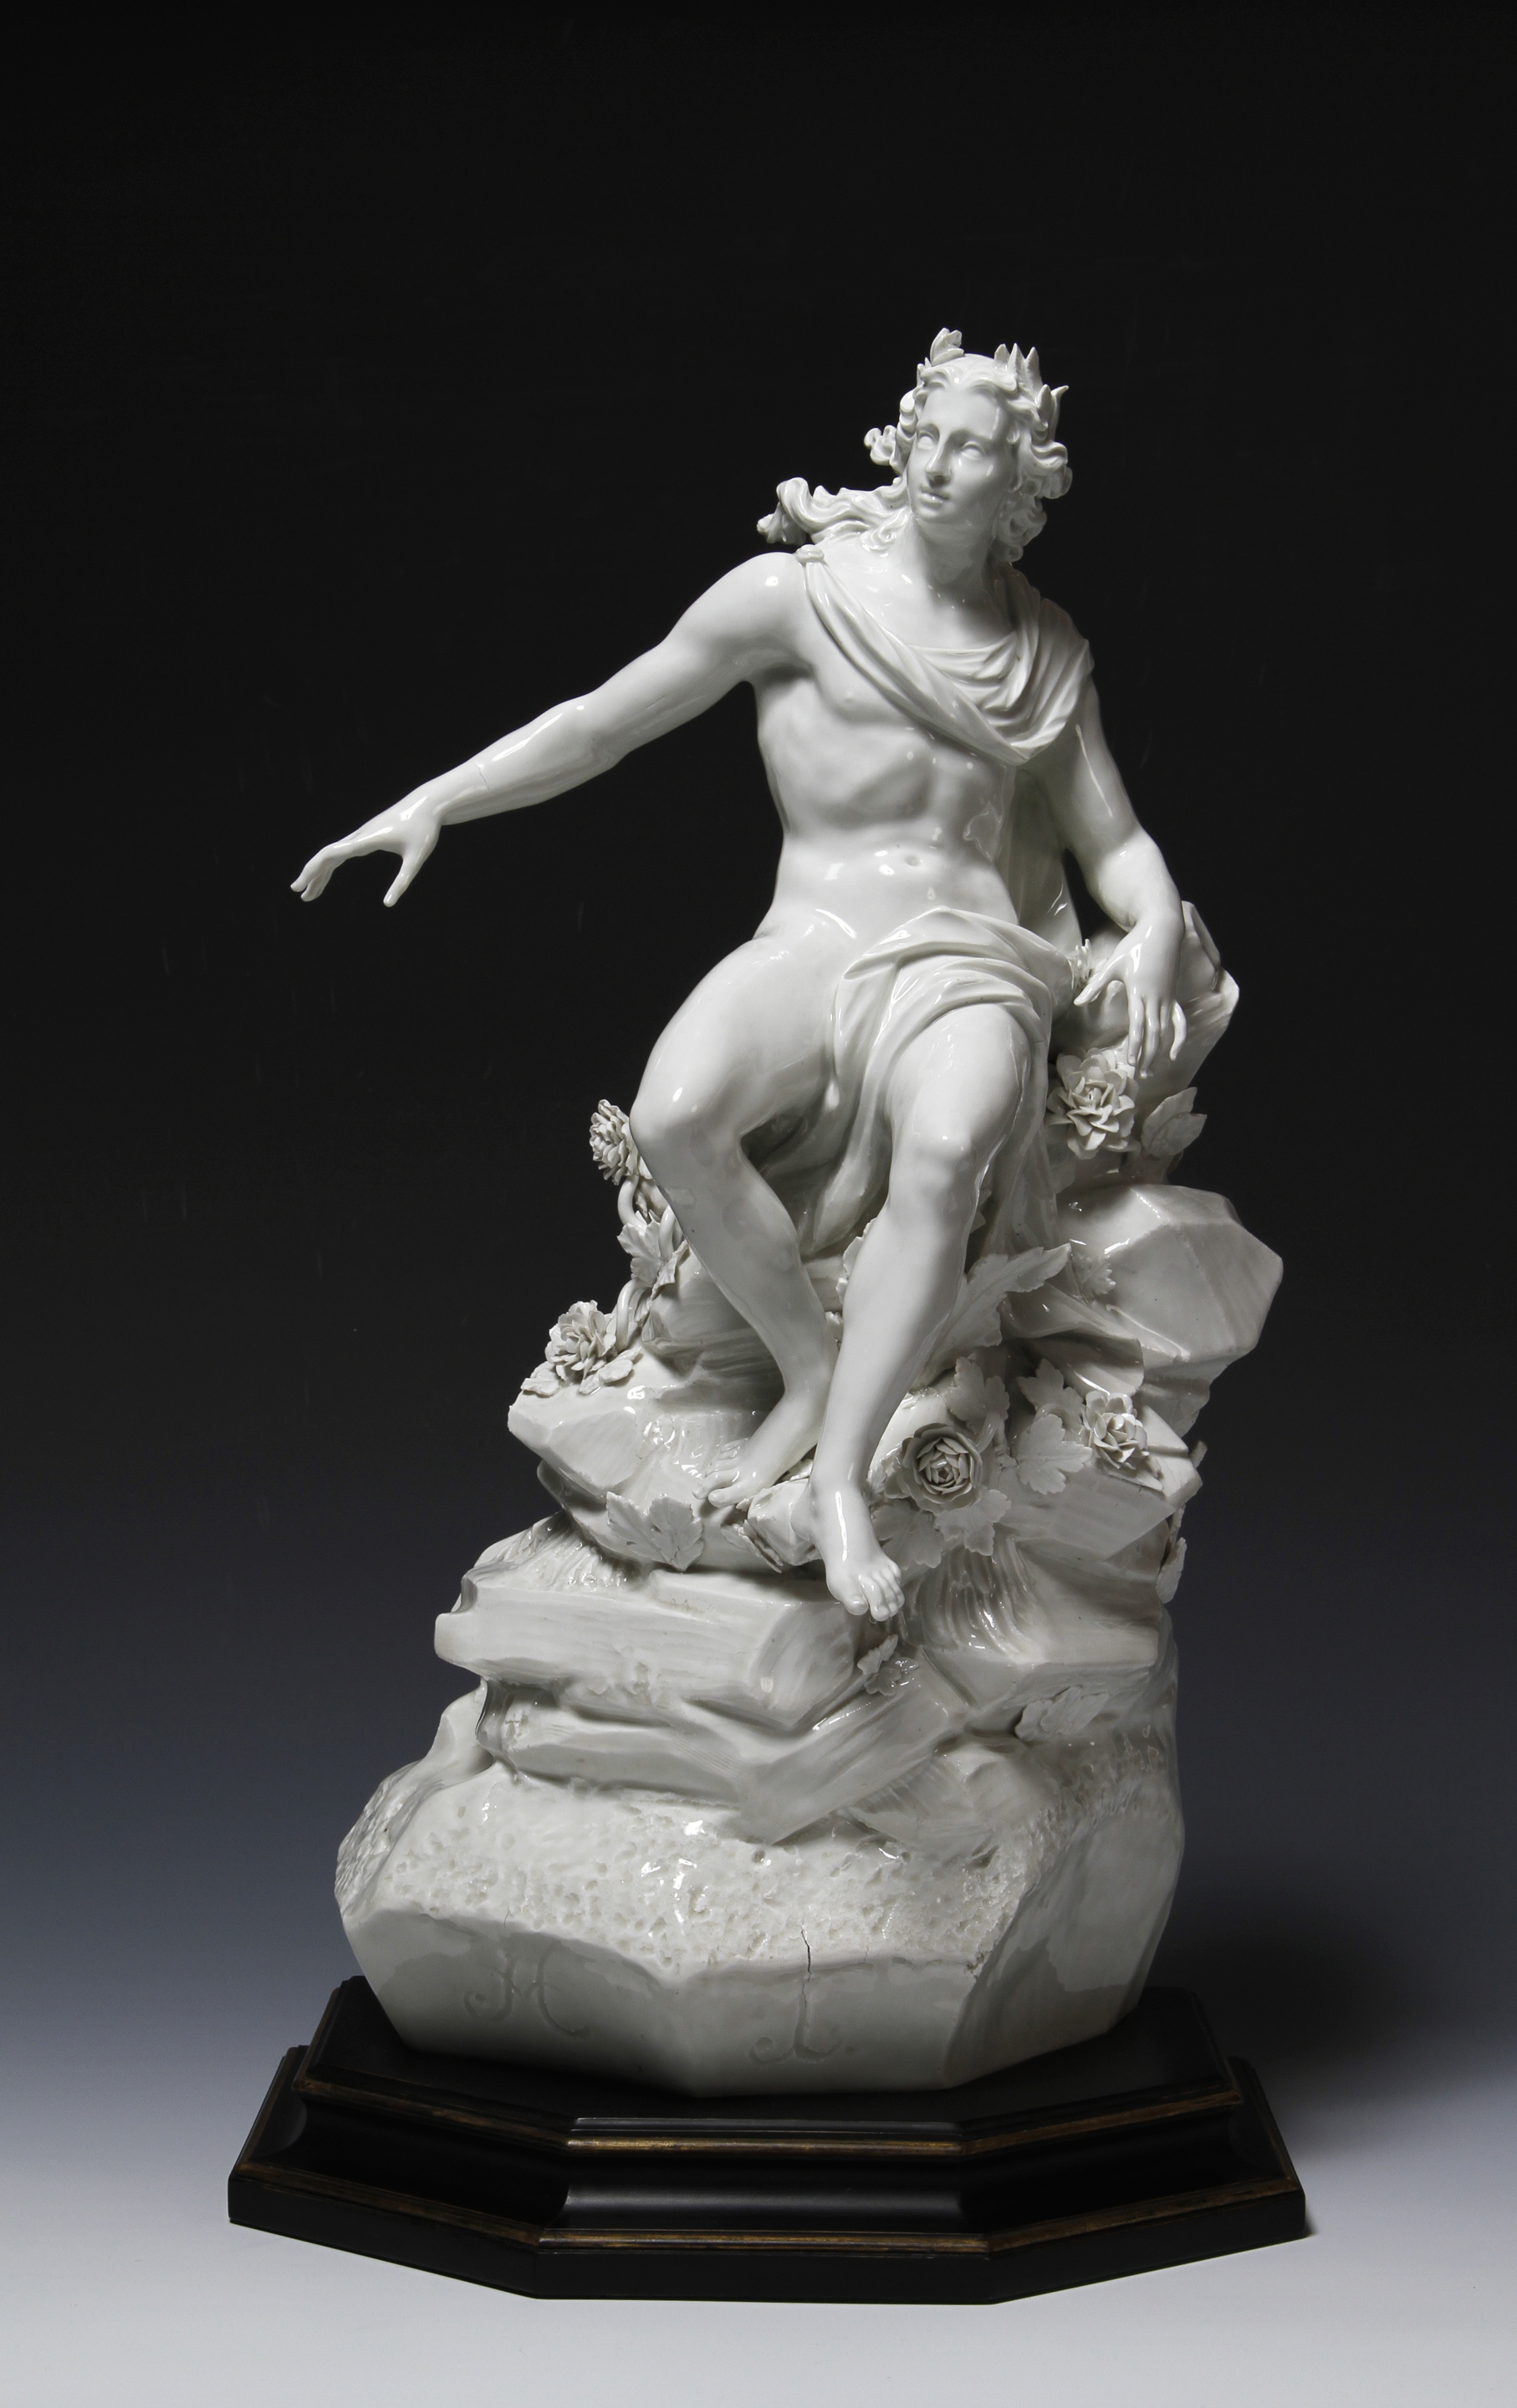 A Figure of Apollo, modelled by Joachim Kaendler